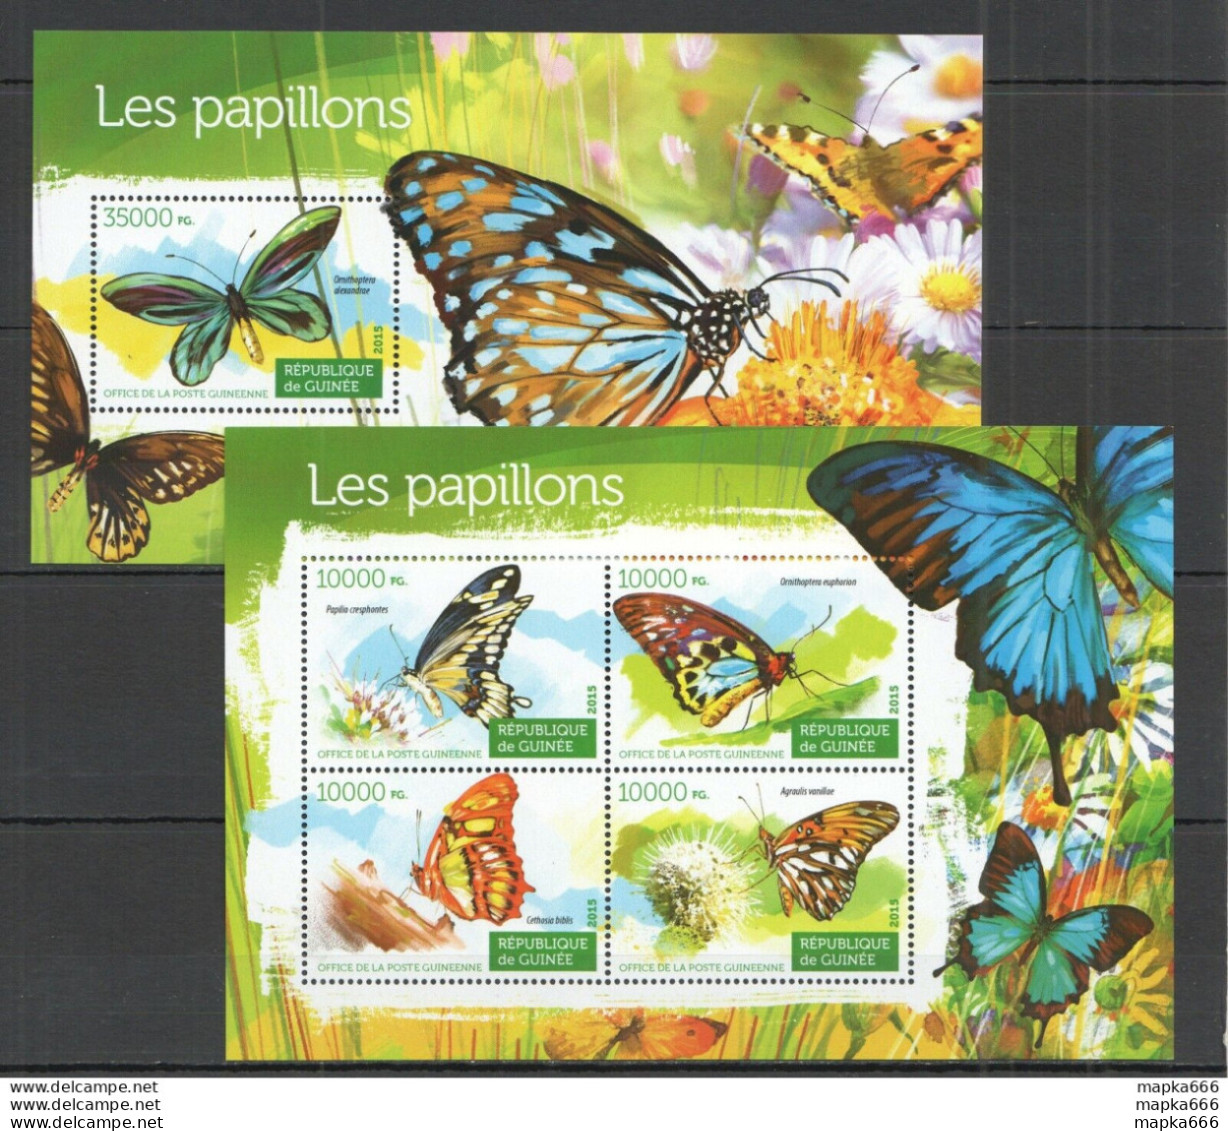 St134 2015 Guinea Butterflies Fauna Insects Les Papillons 1Kb+1Bl Mnh Stamps - Butterflies